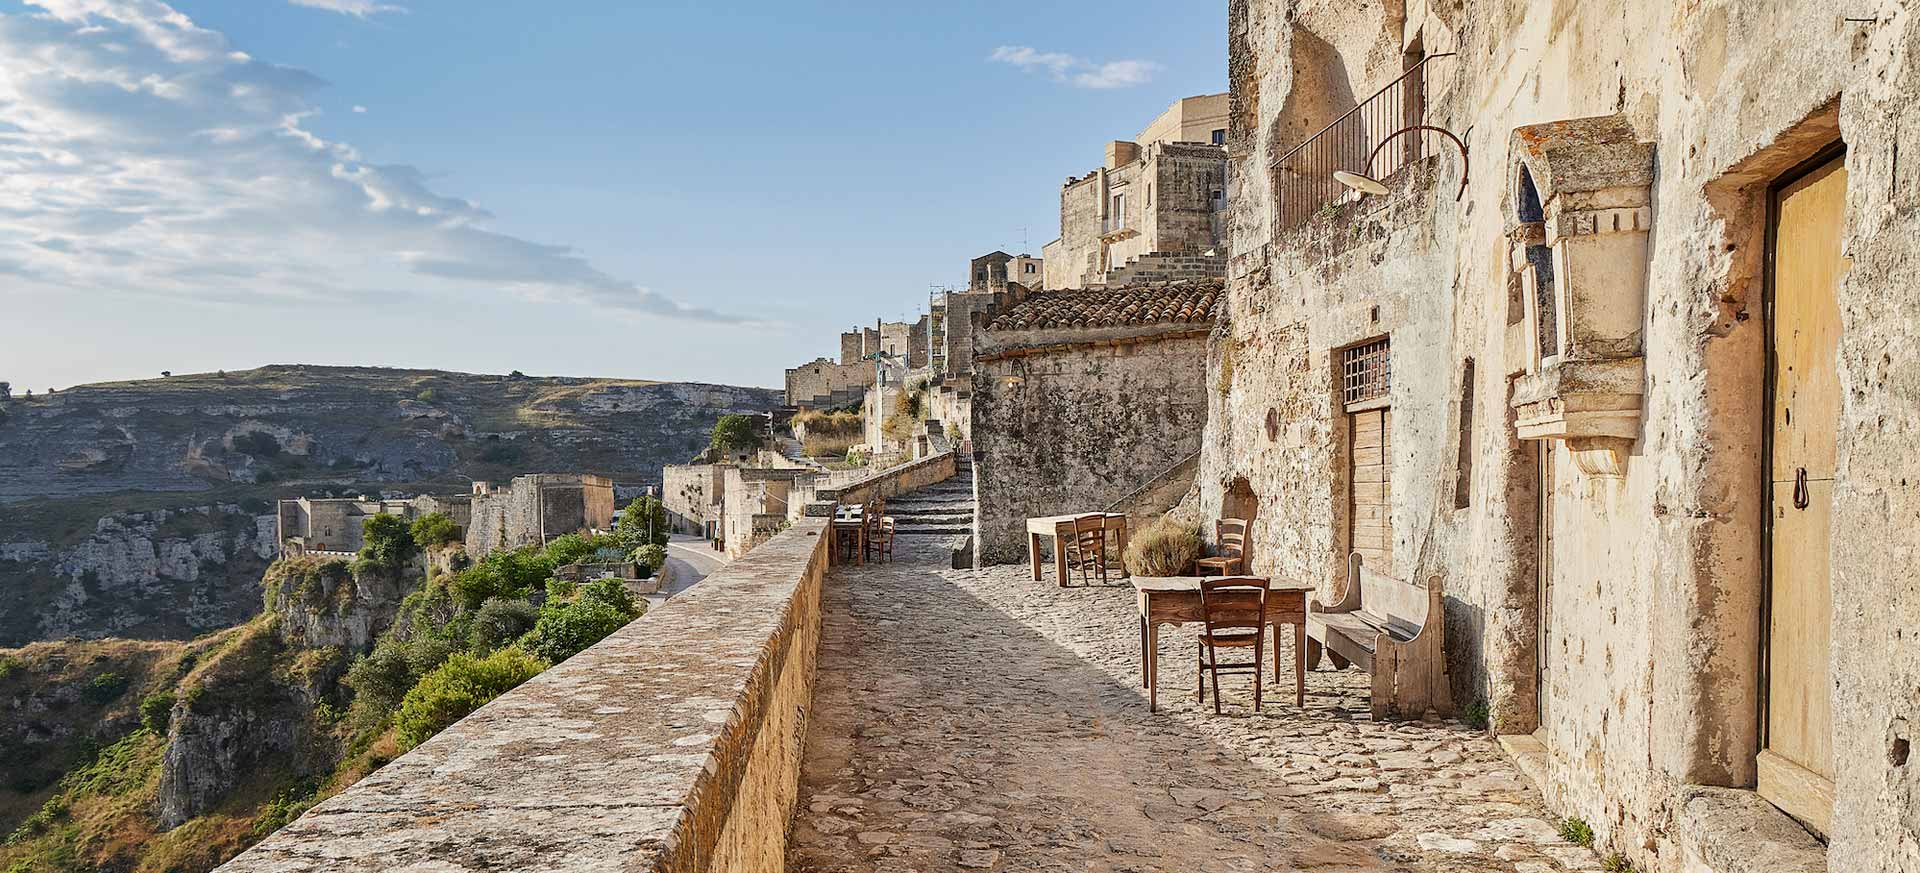 Luxury hotel Sassi of Matera - Basilicata